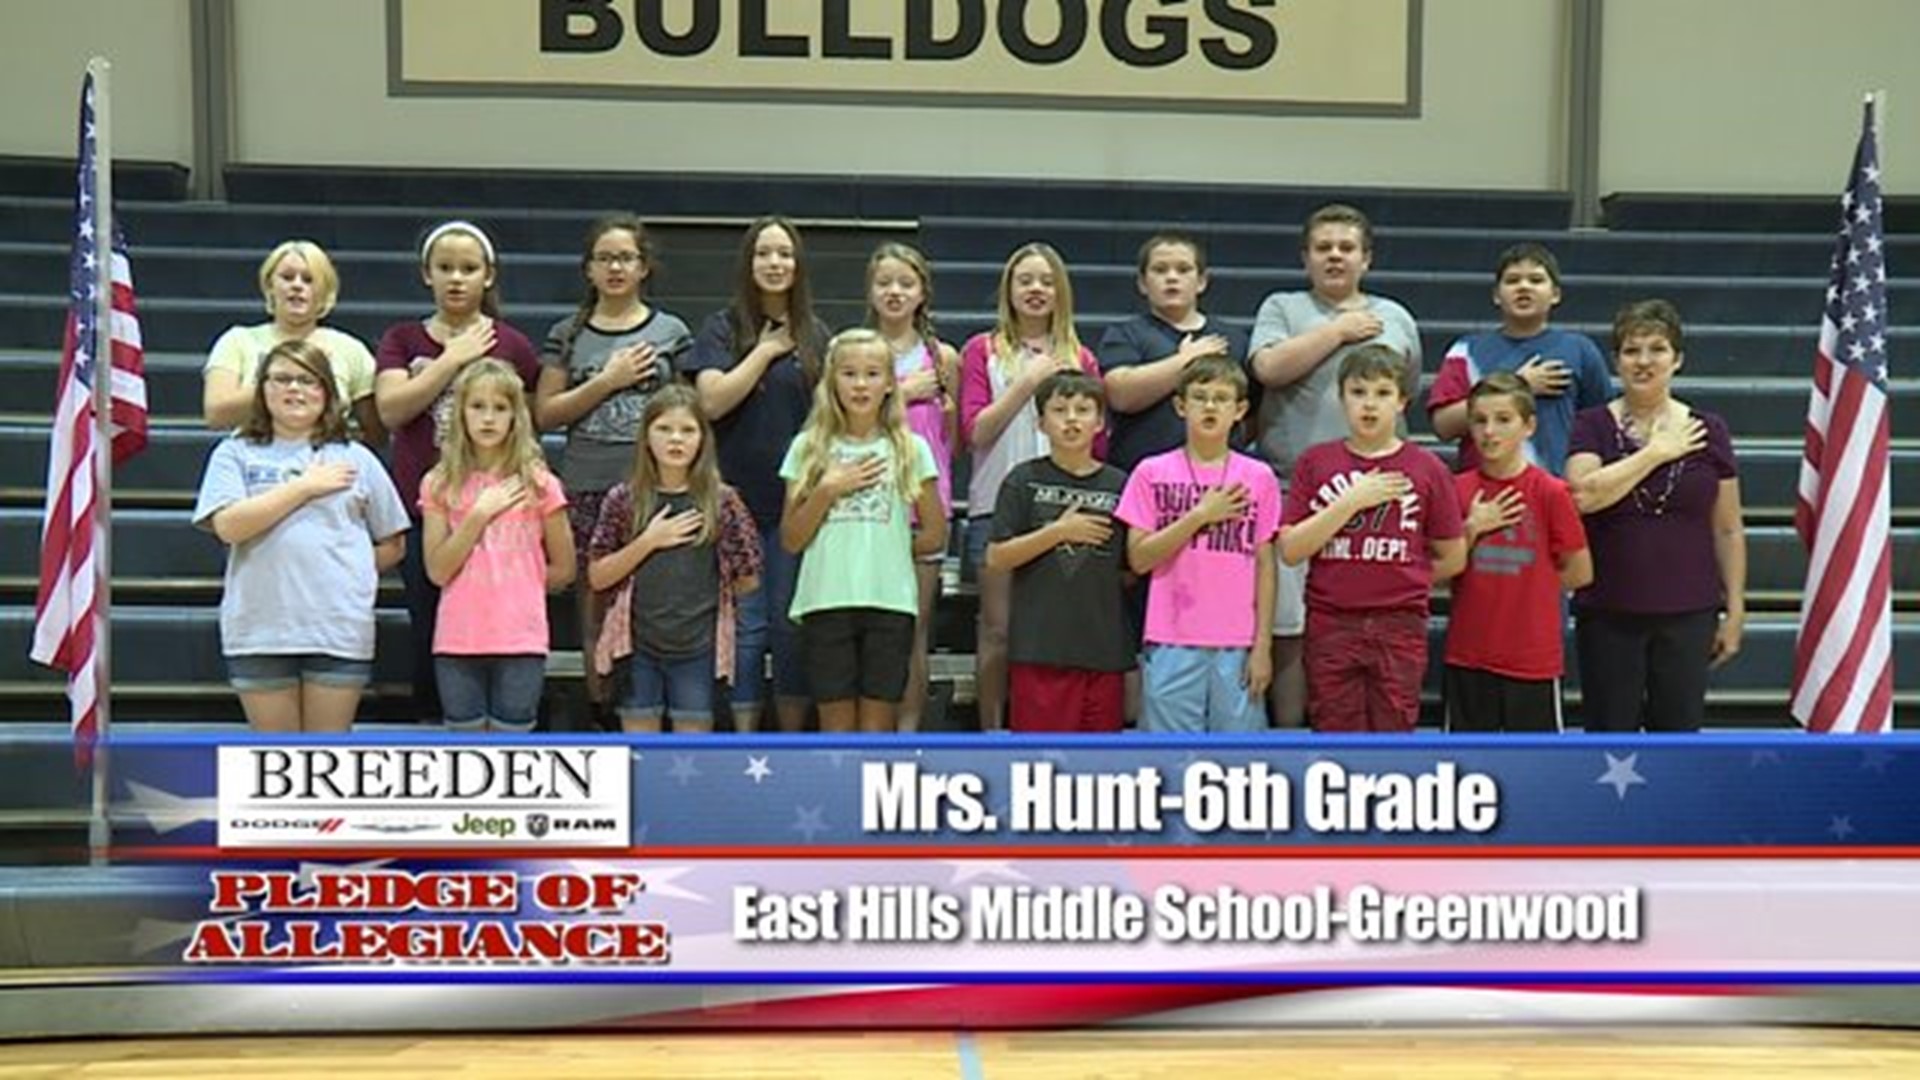 East Hills Middle School, Greenwood - Mrs. Hunt, 6th Grade